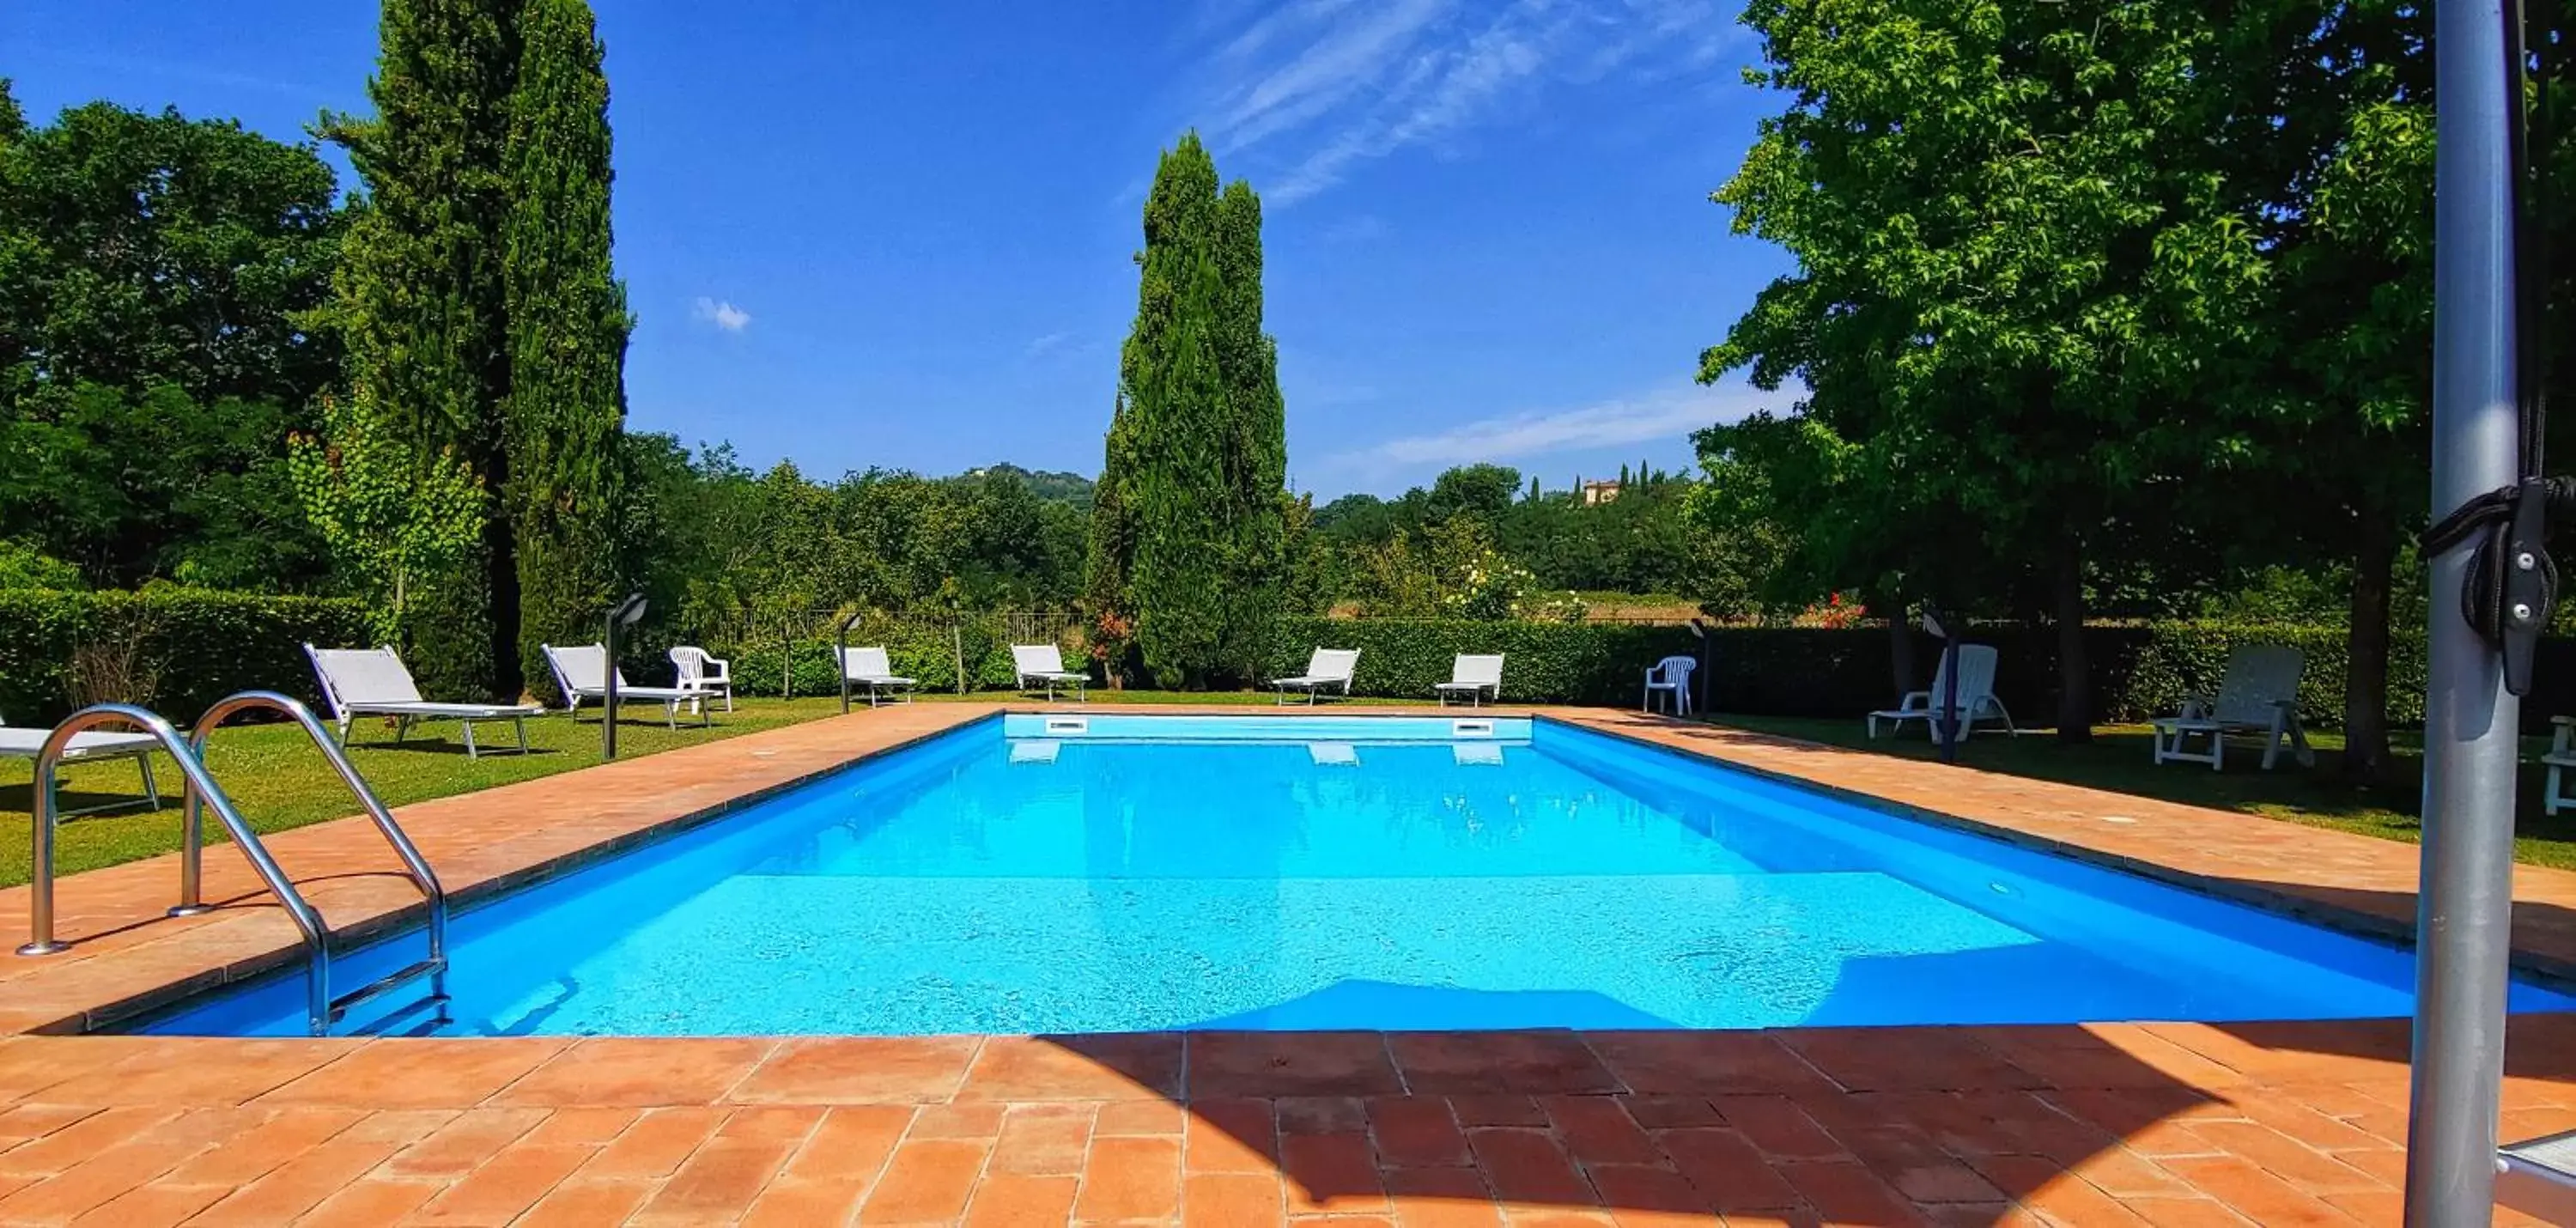 Swimming Pool in Torrebianca Tuscany